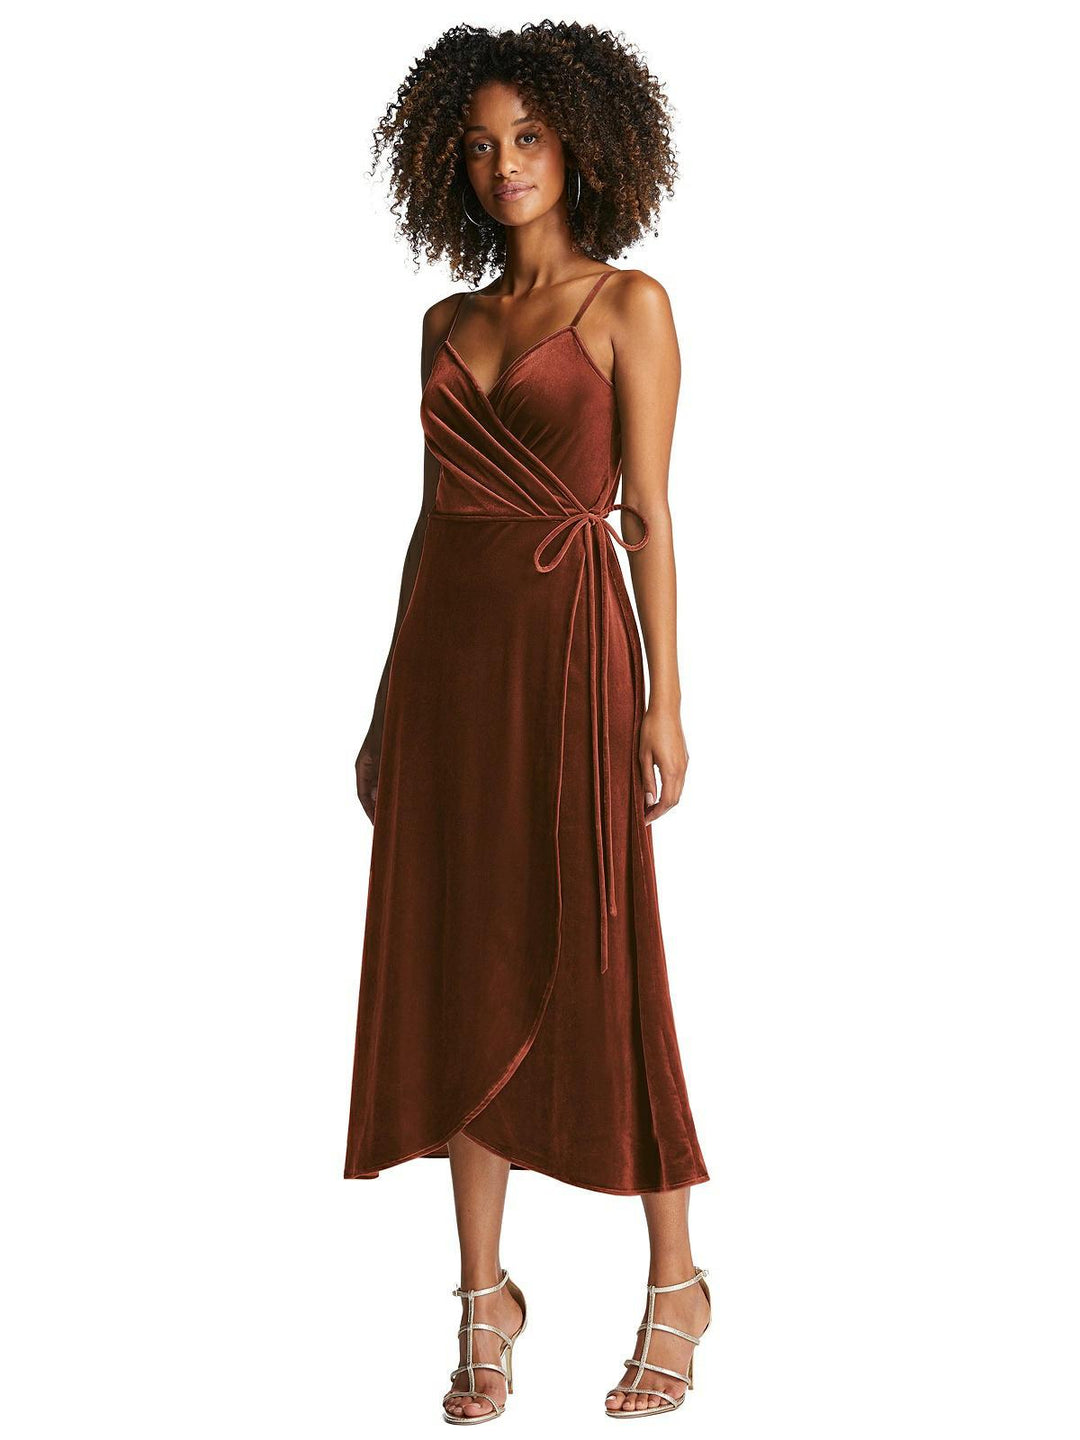 Velvet Midi Wrap Dress by Dessy Style 1537 Size L